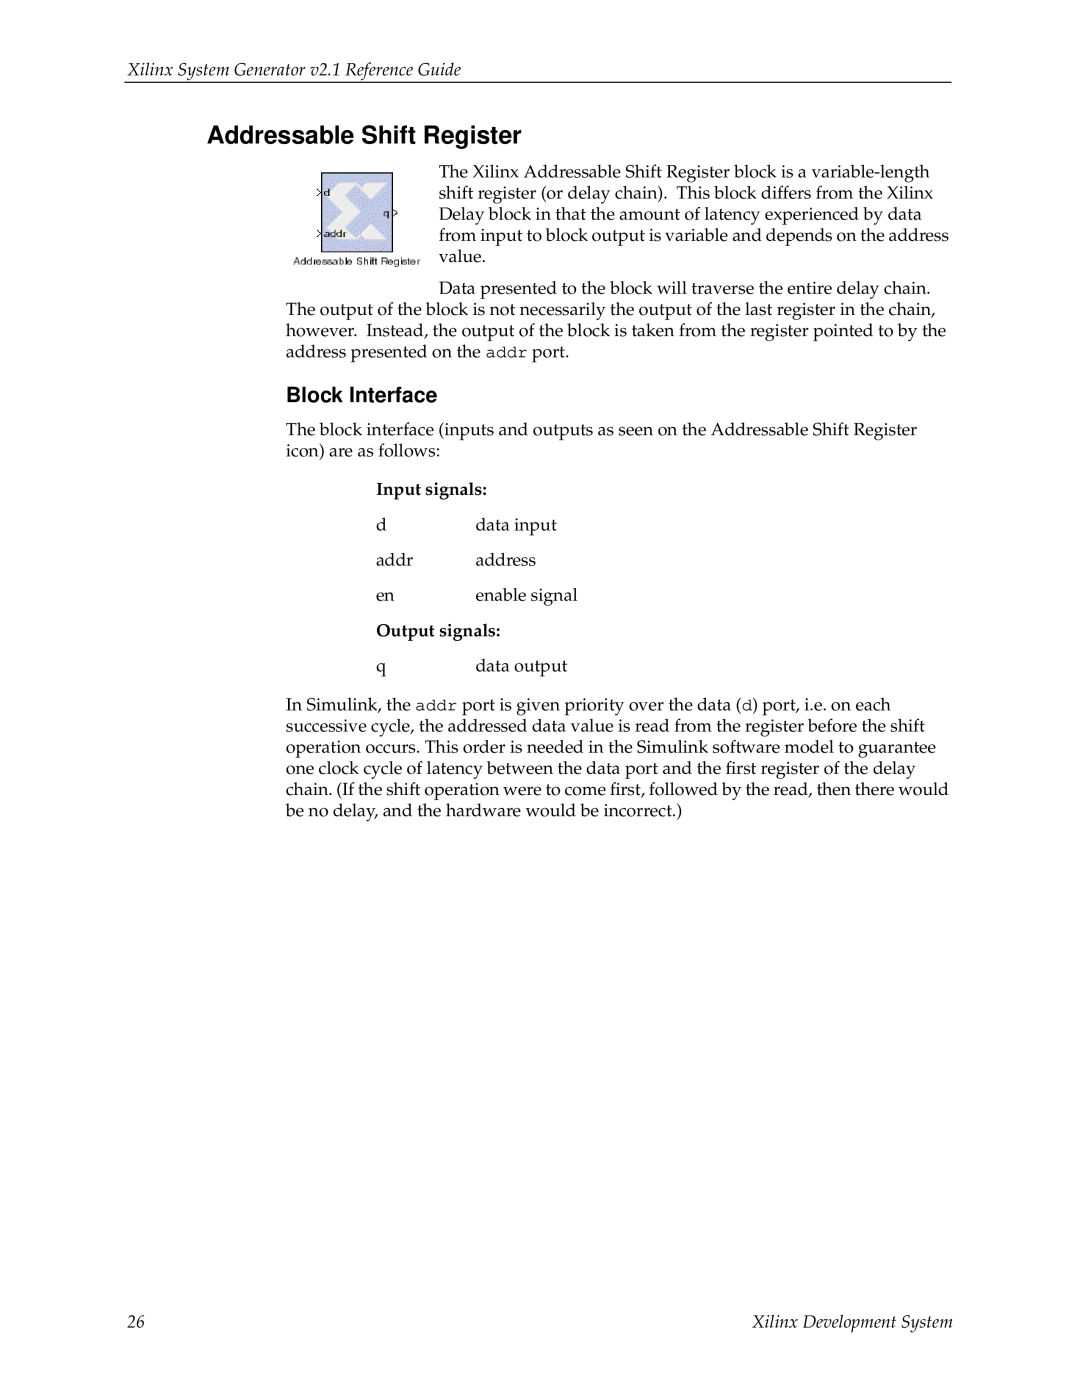 Xilinx V2.1 manual Addressable Shift Register, Block Interface, Xilinx System Generator v2.1 Reference Guide 